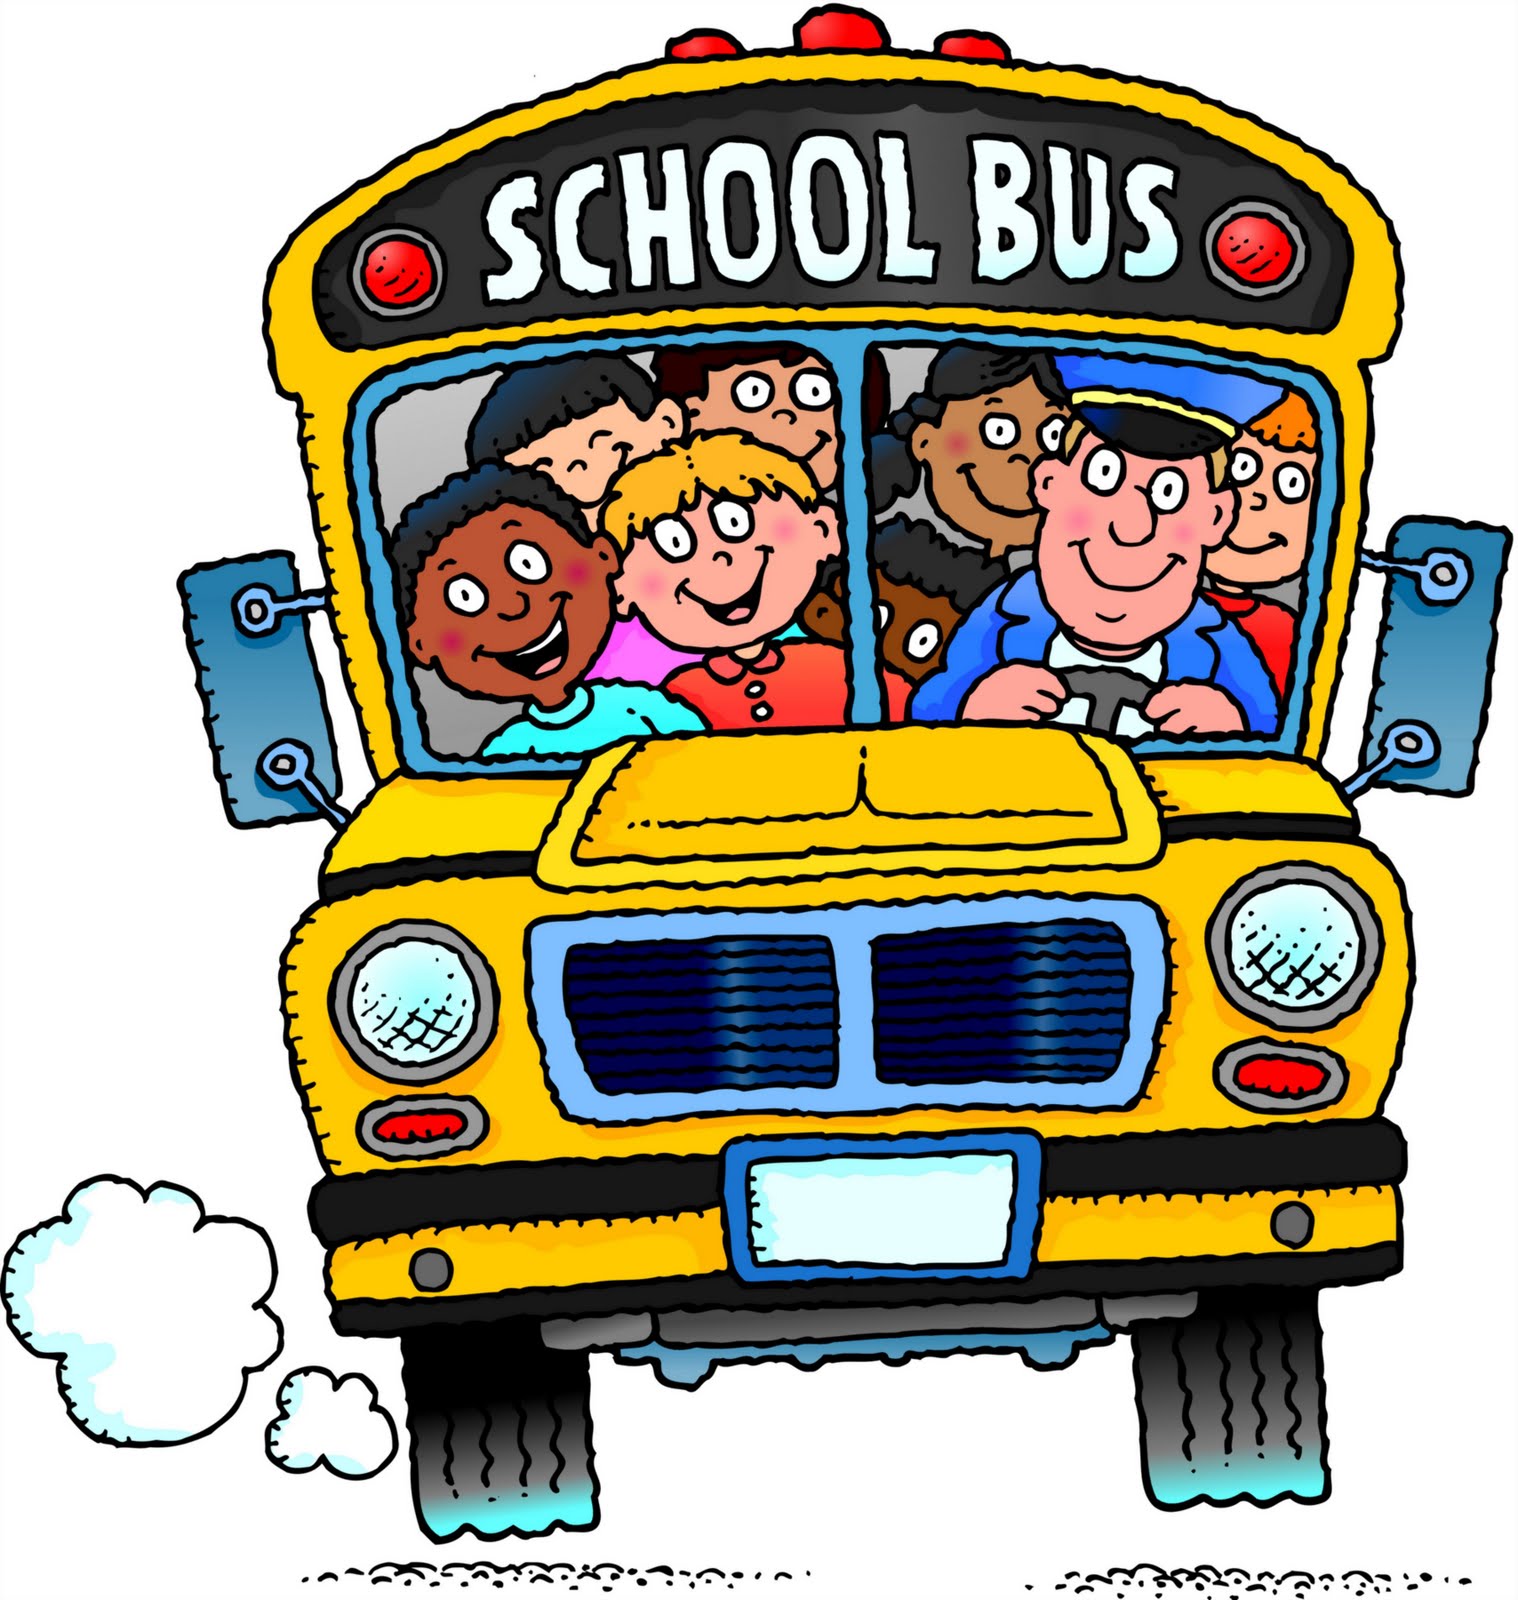 School bus registration